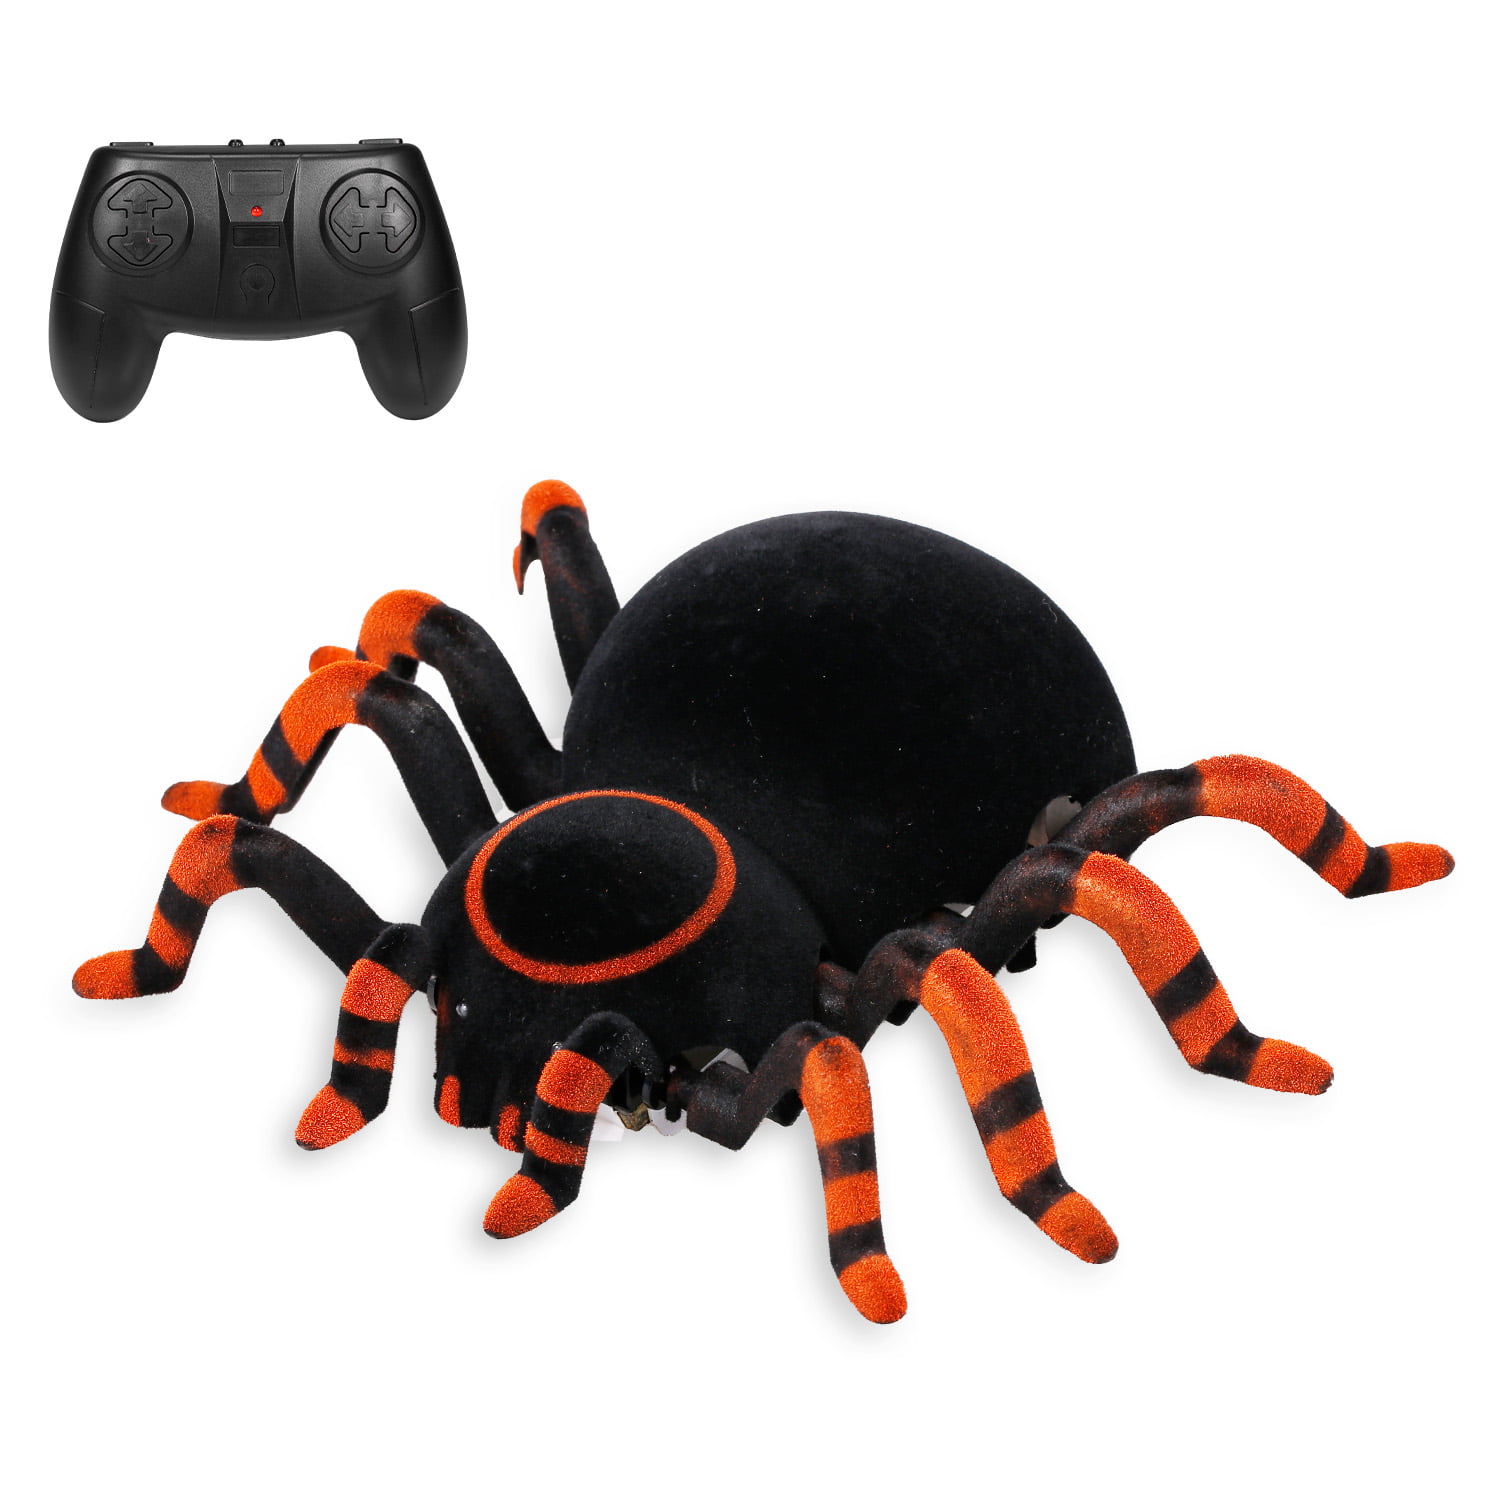 Remote Control Scary Creepy Soft Spider Infrared RC Car Tarantula Toy Prank Fun 